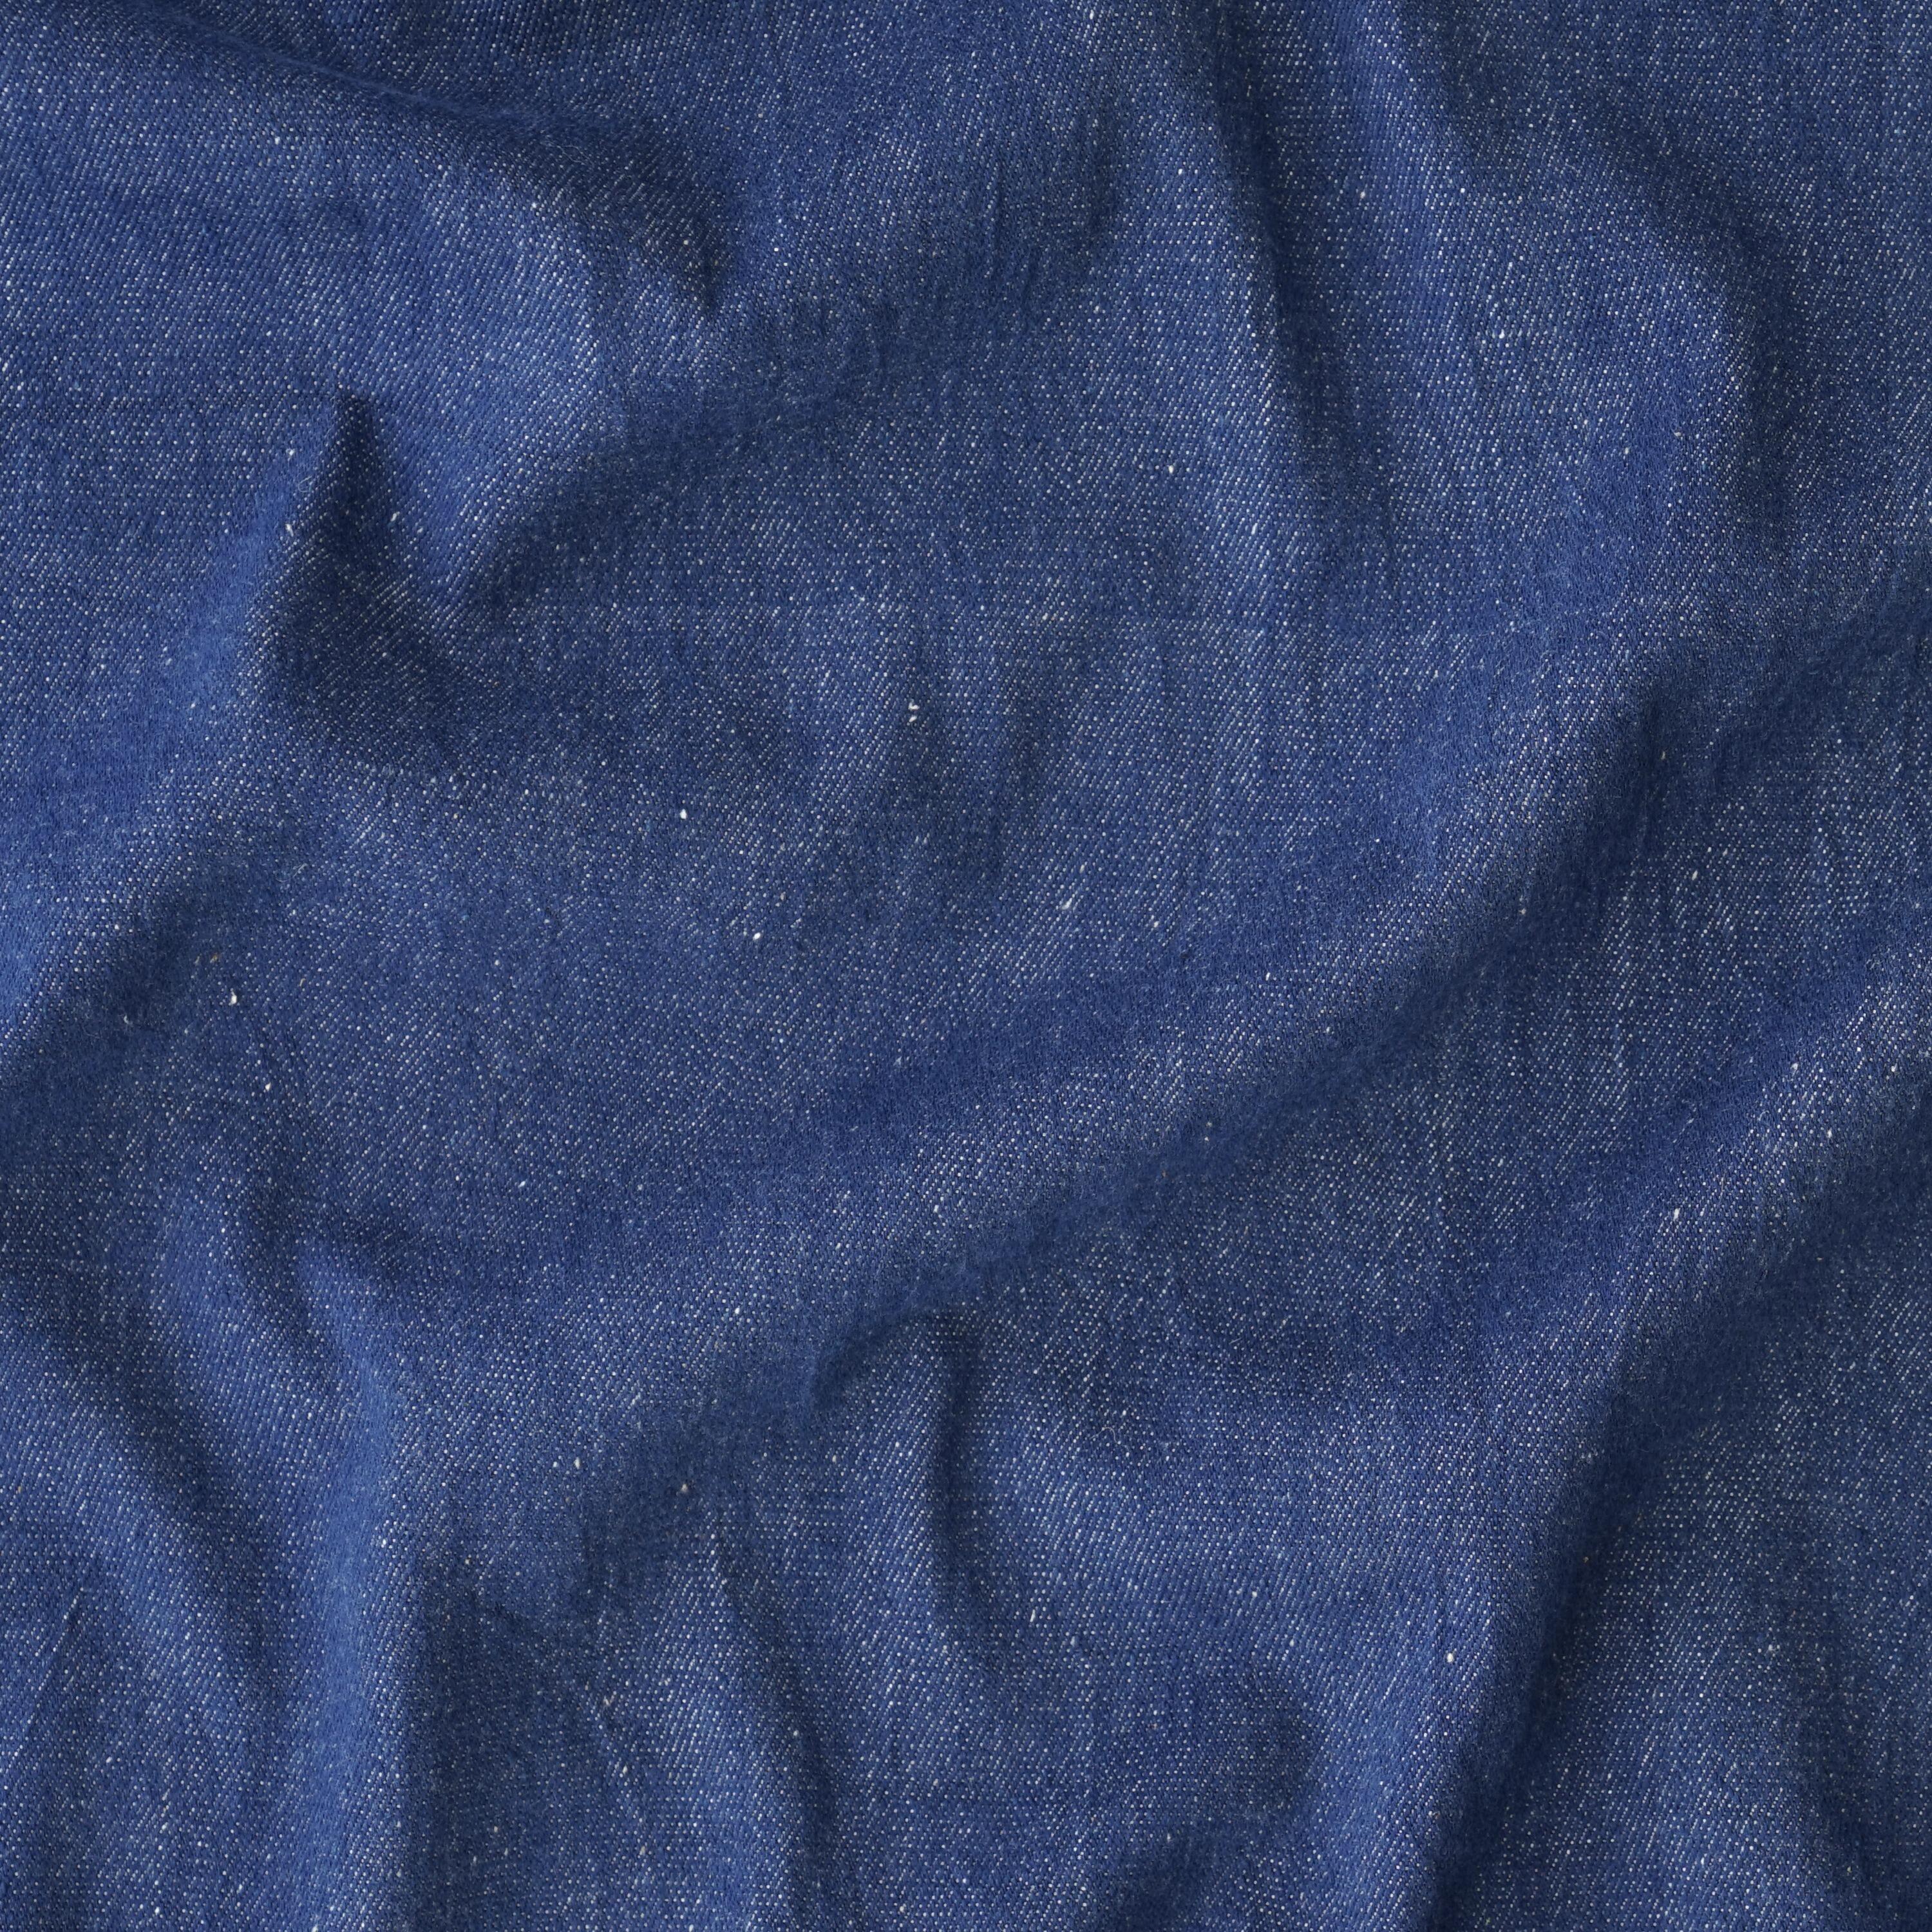 KJC08 - Black Handloom Woven Denim - Organic Cotton - Contrast